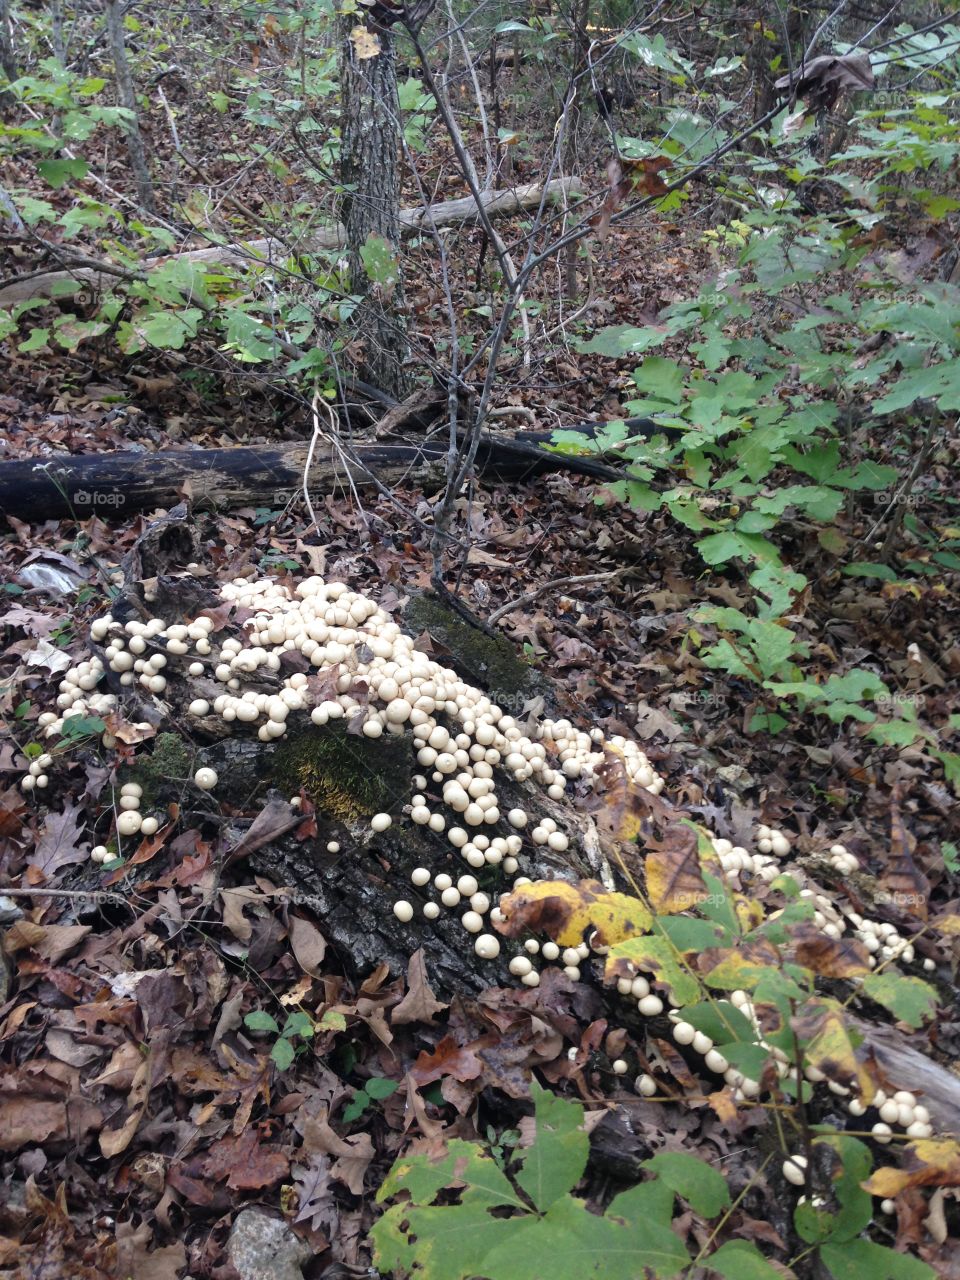 Mushrooms in the woods. 